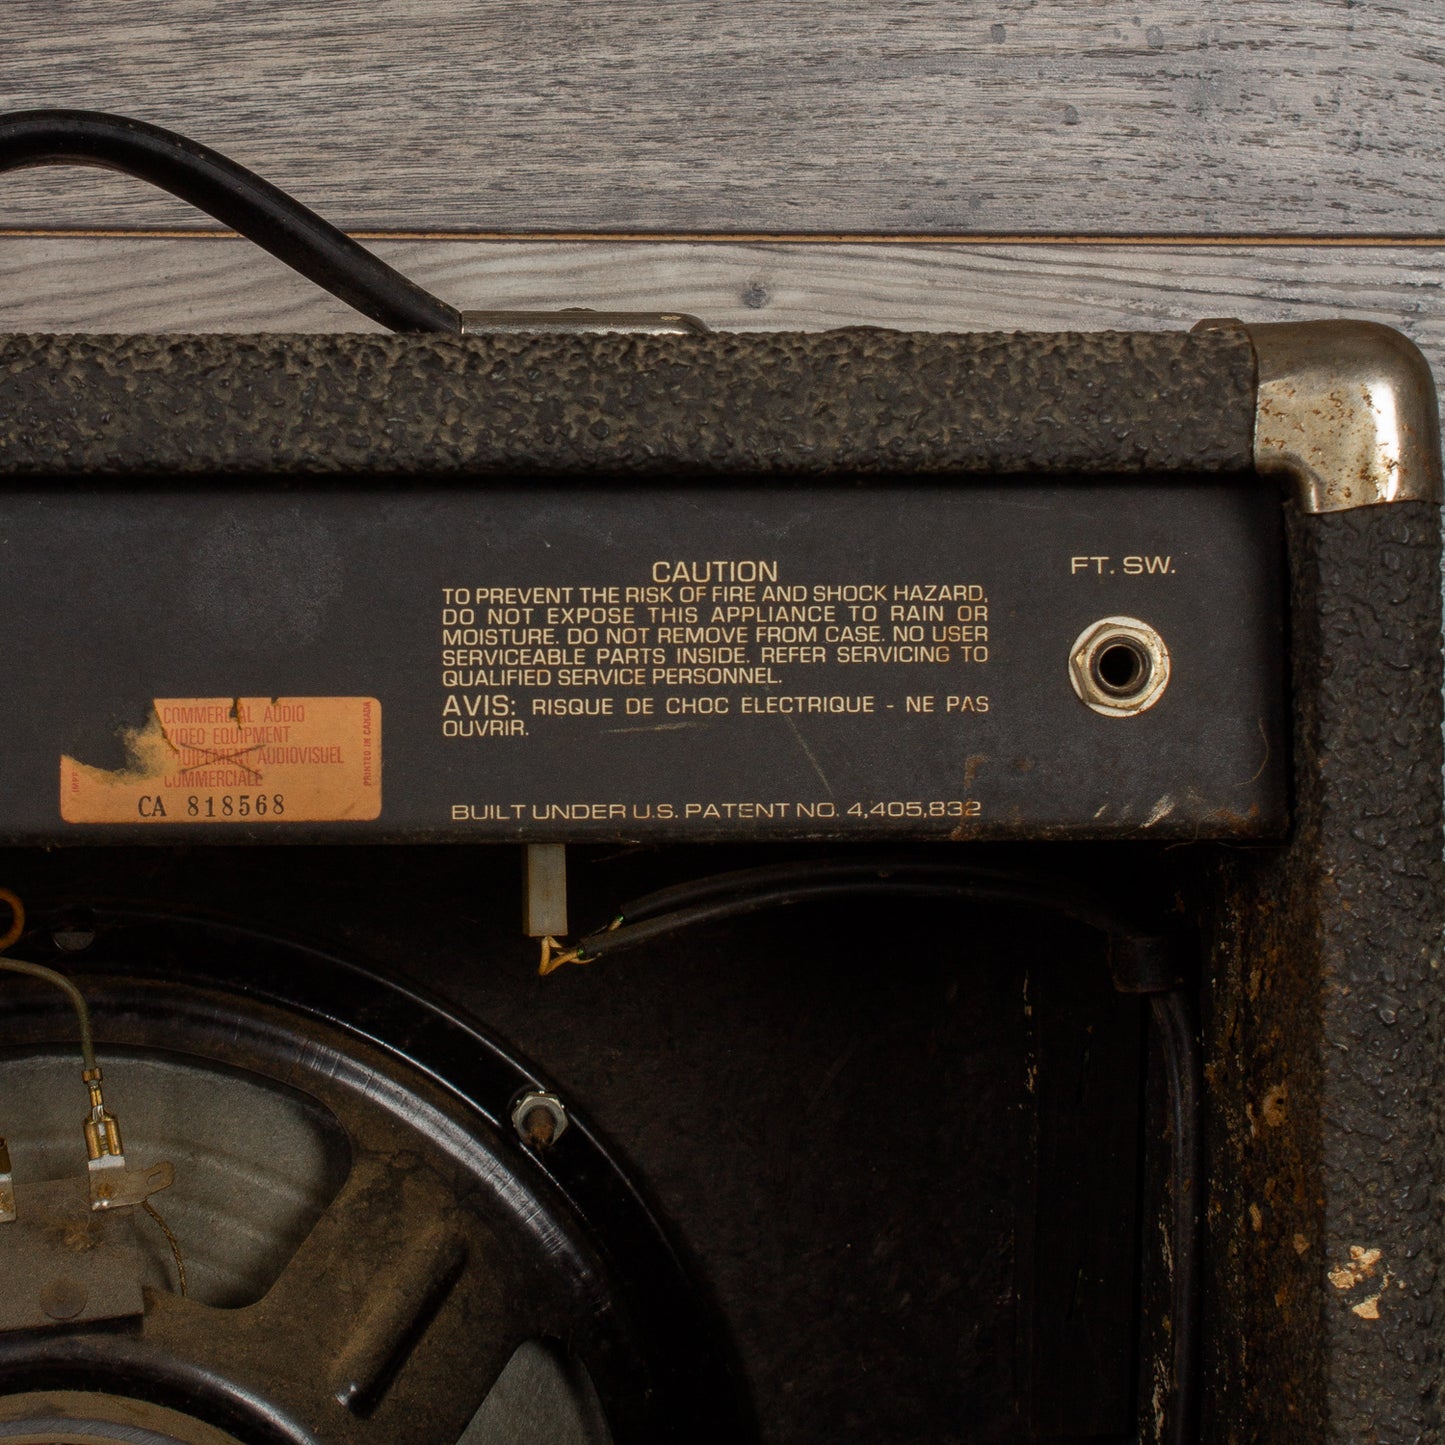 1980's Peavey Backstage Plus Amplifier